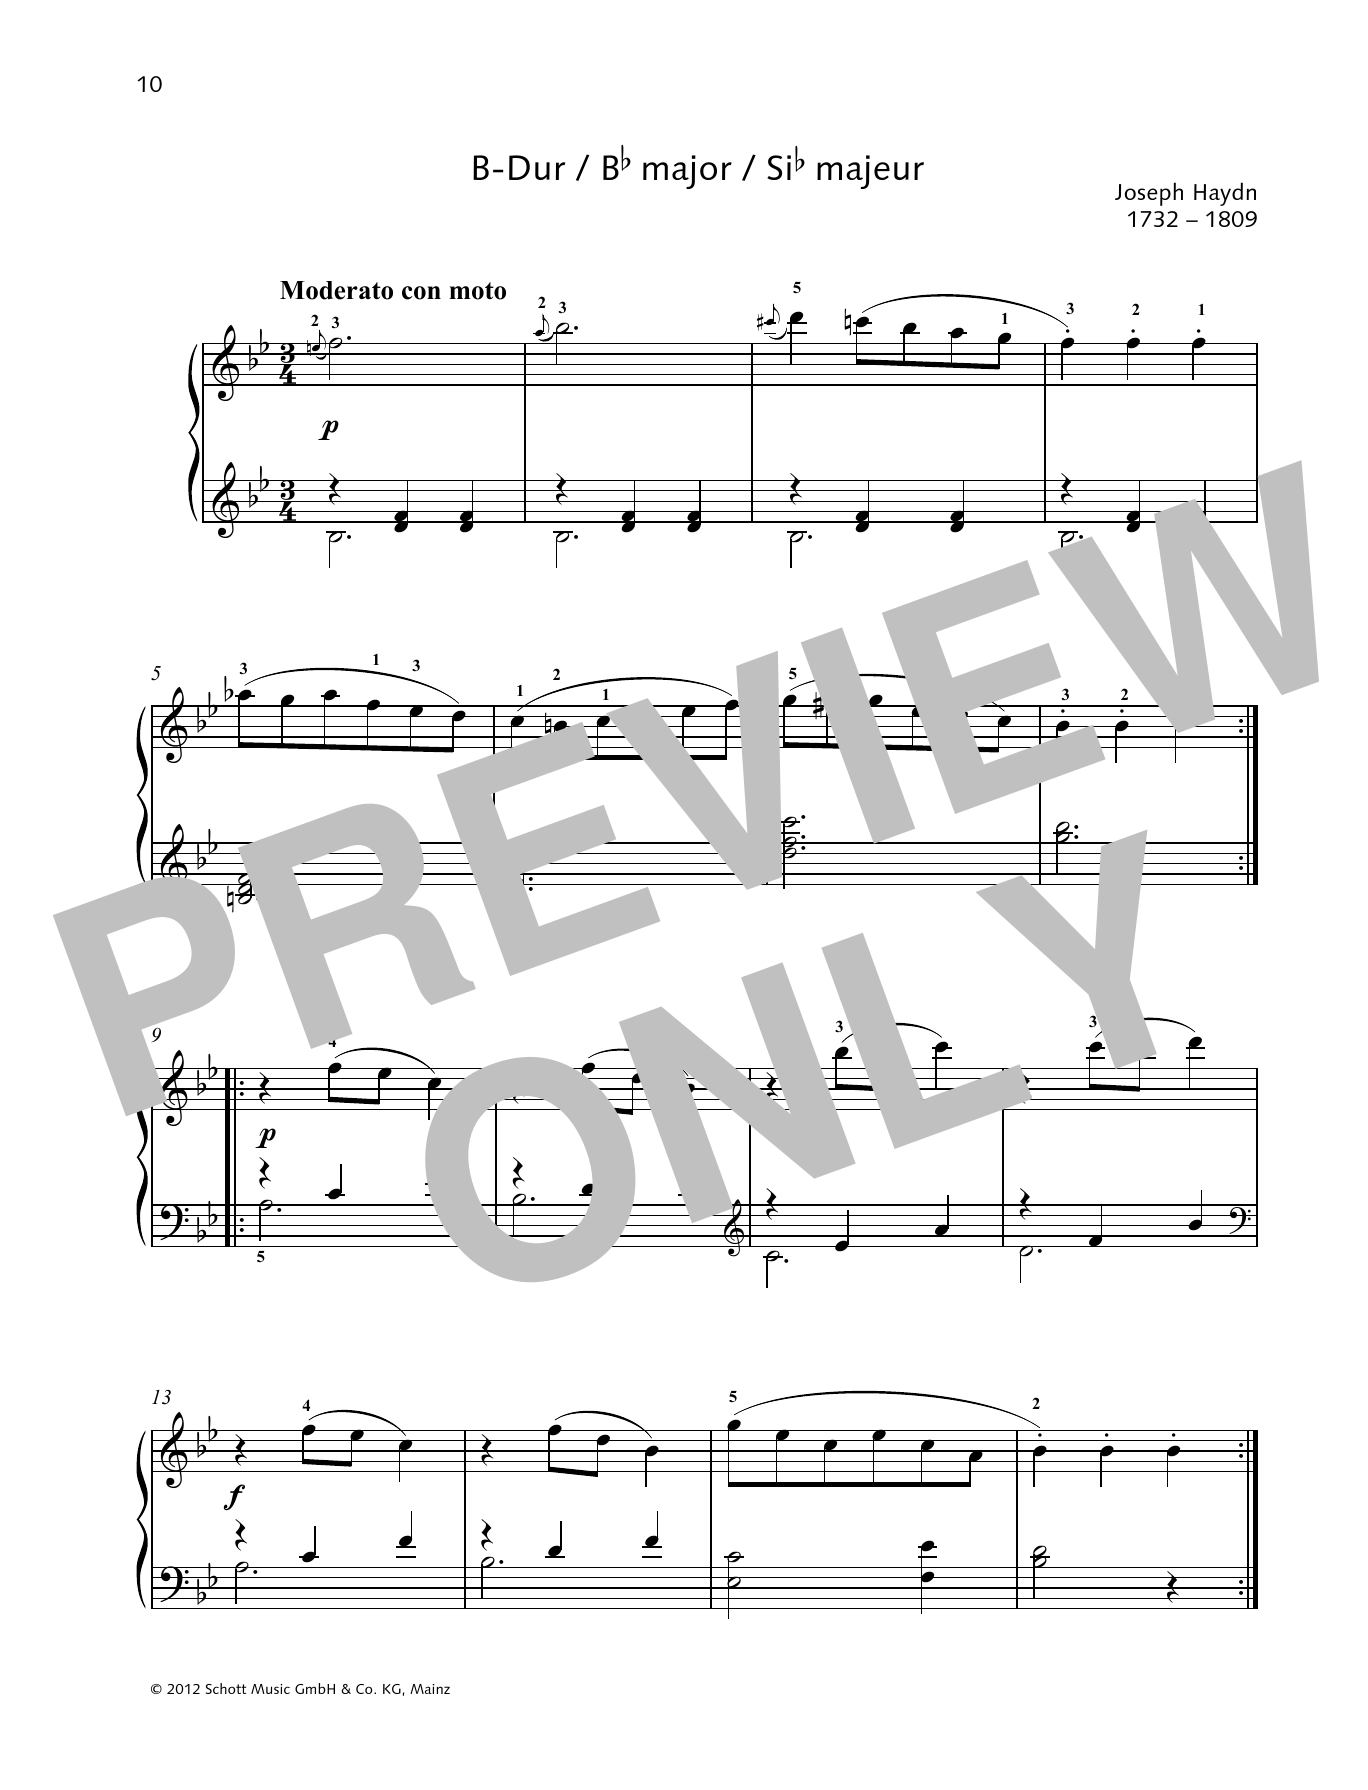 Joseph Haydn German Dance B-flat major Sheet Music Notes & Chords for Piano Solo - Download or Print PDF